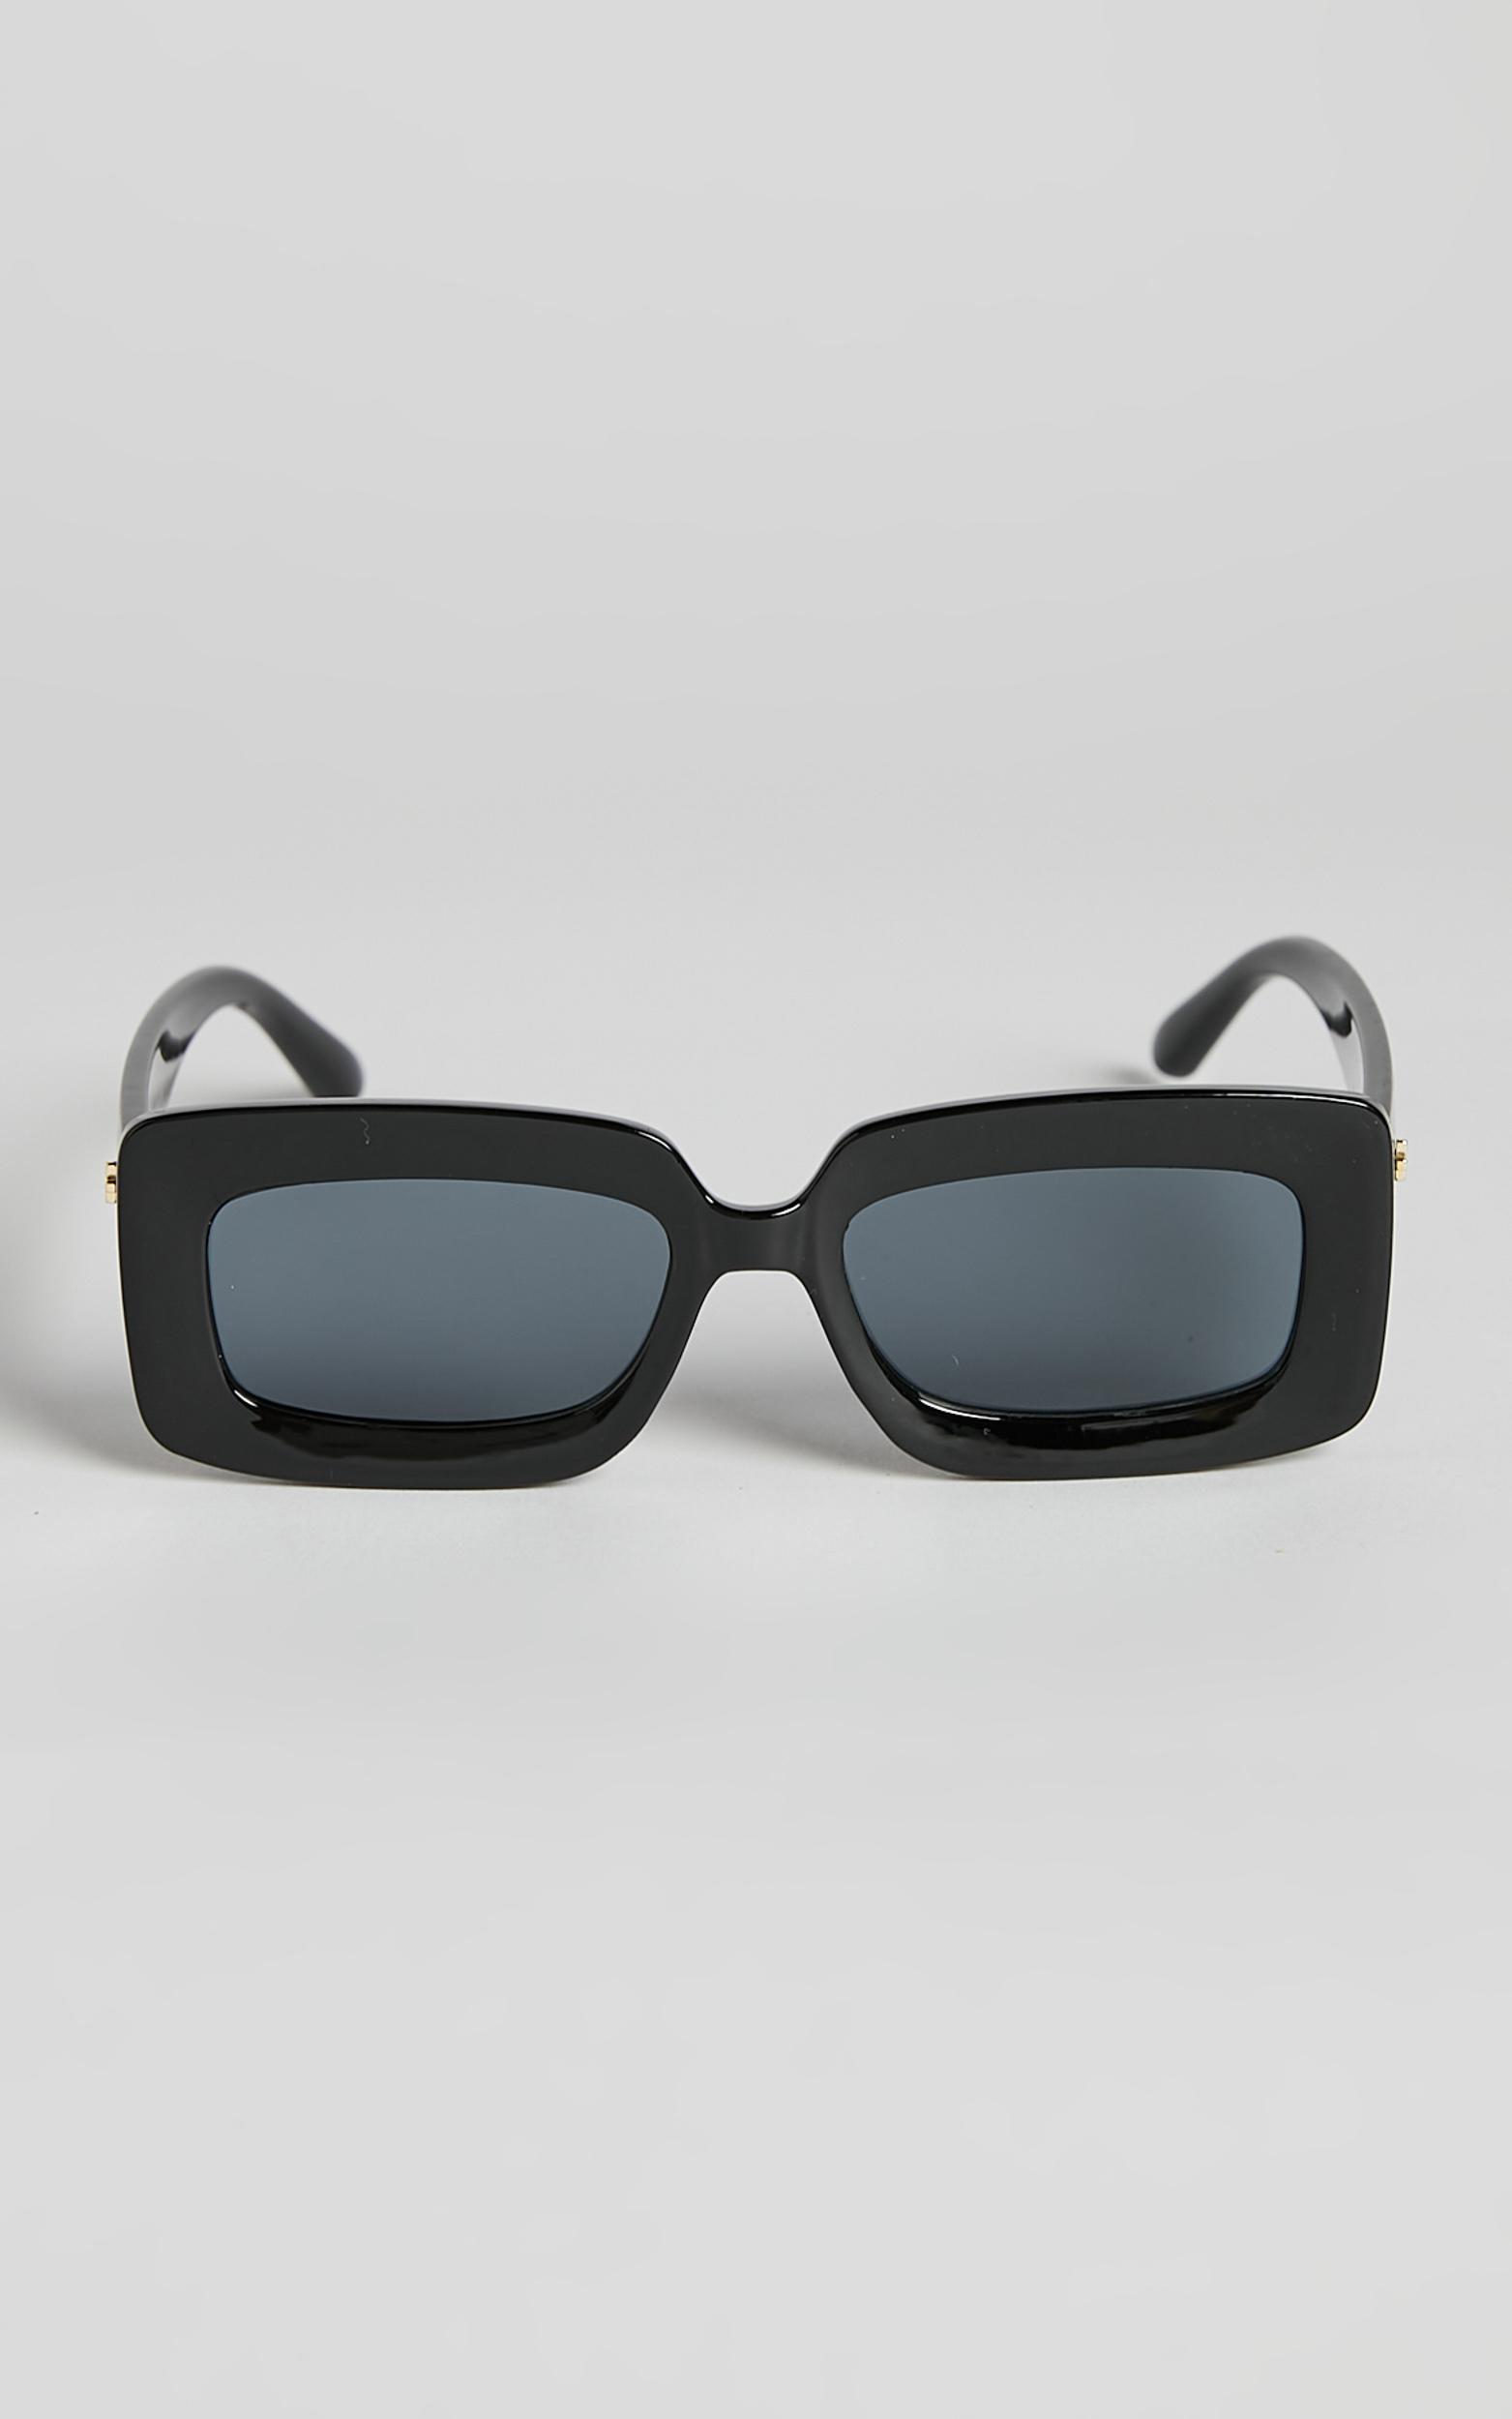 Peta and Jain - Blurred Sunglasses in Black | Showpo USA